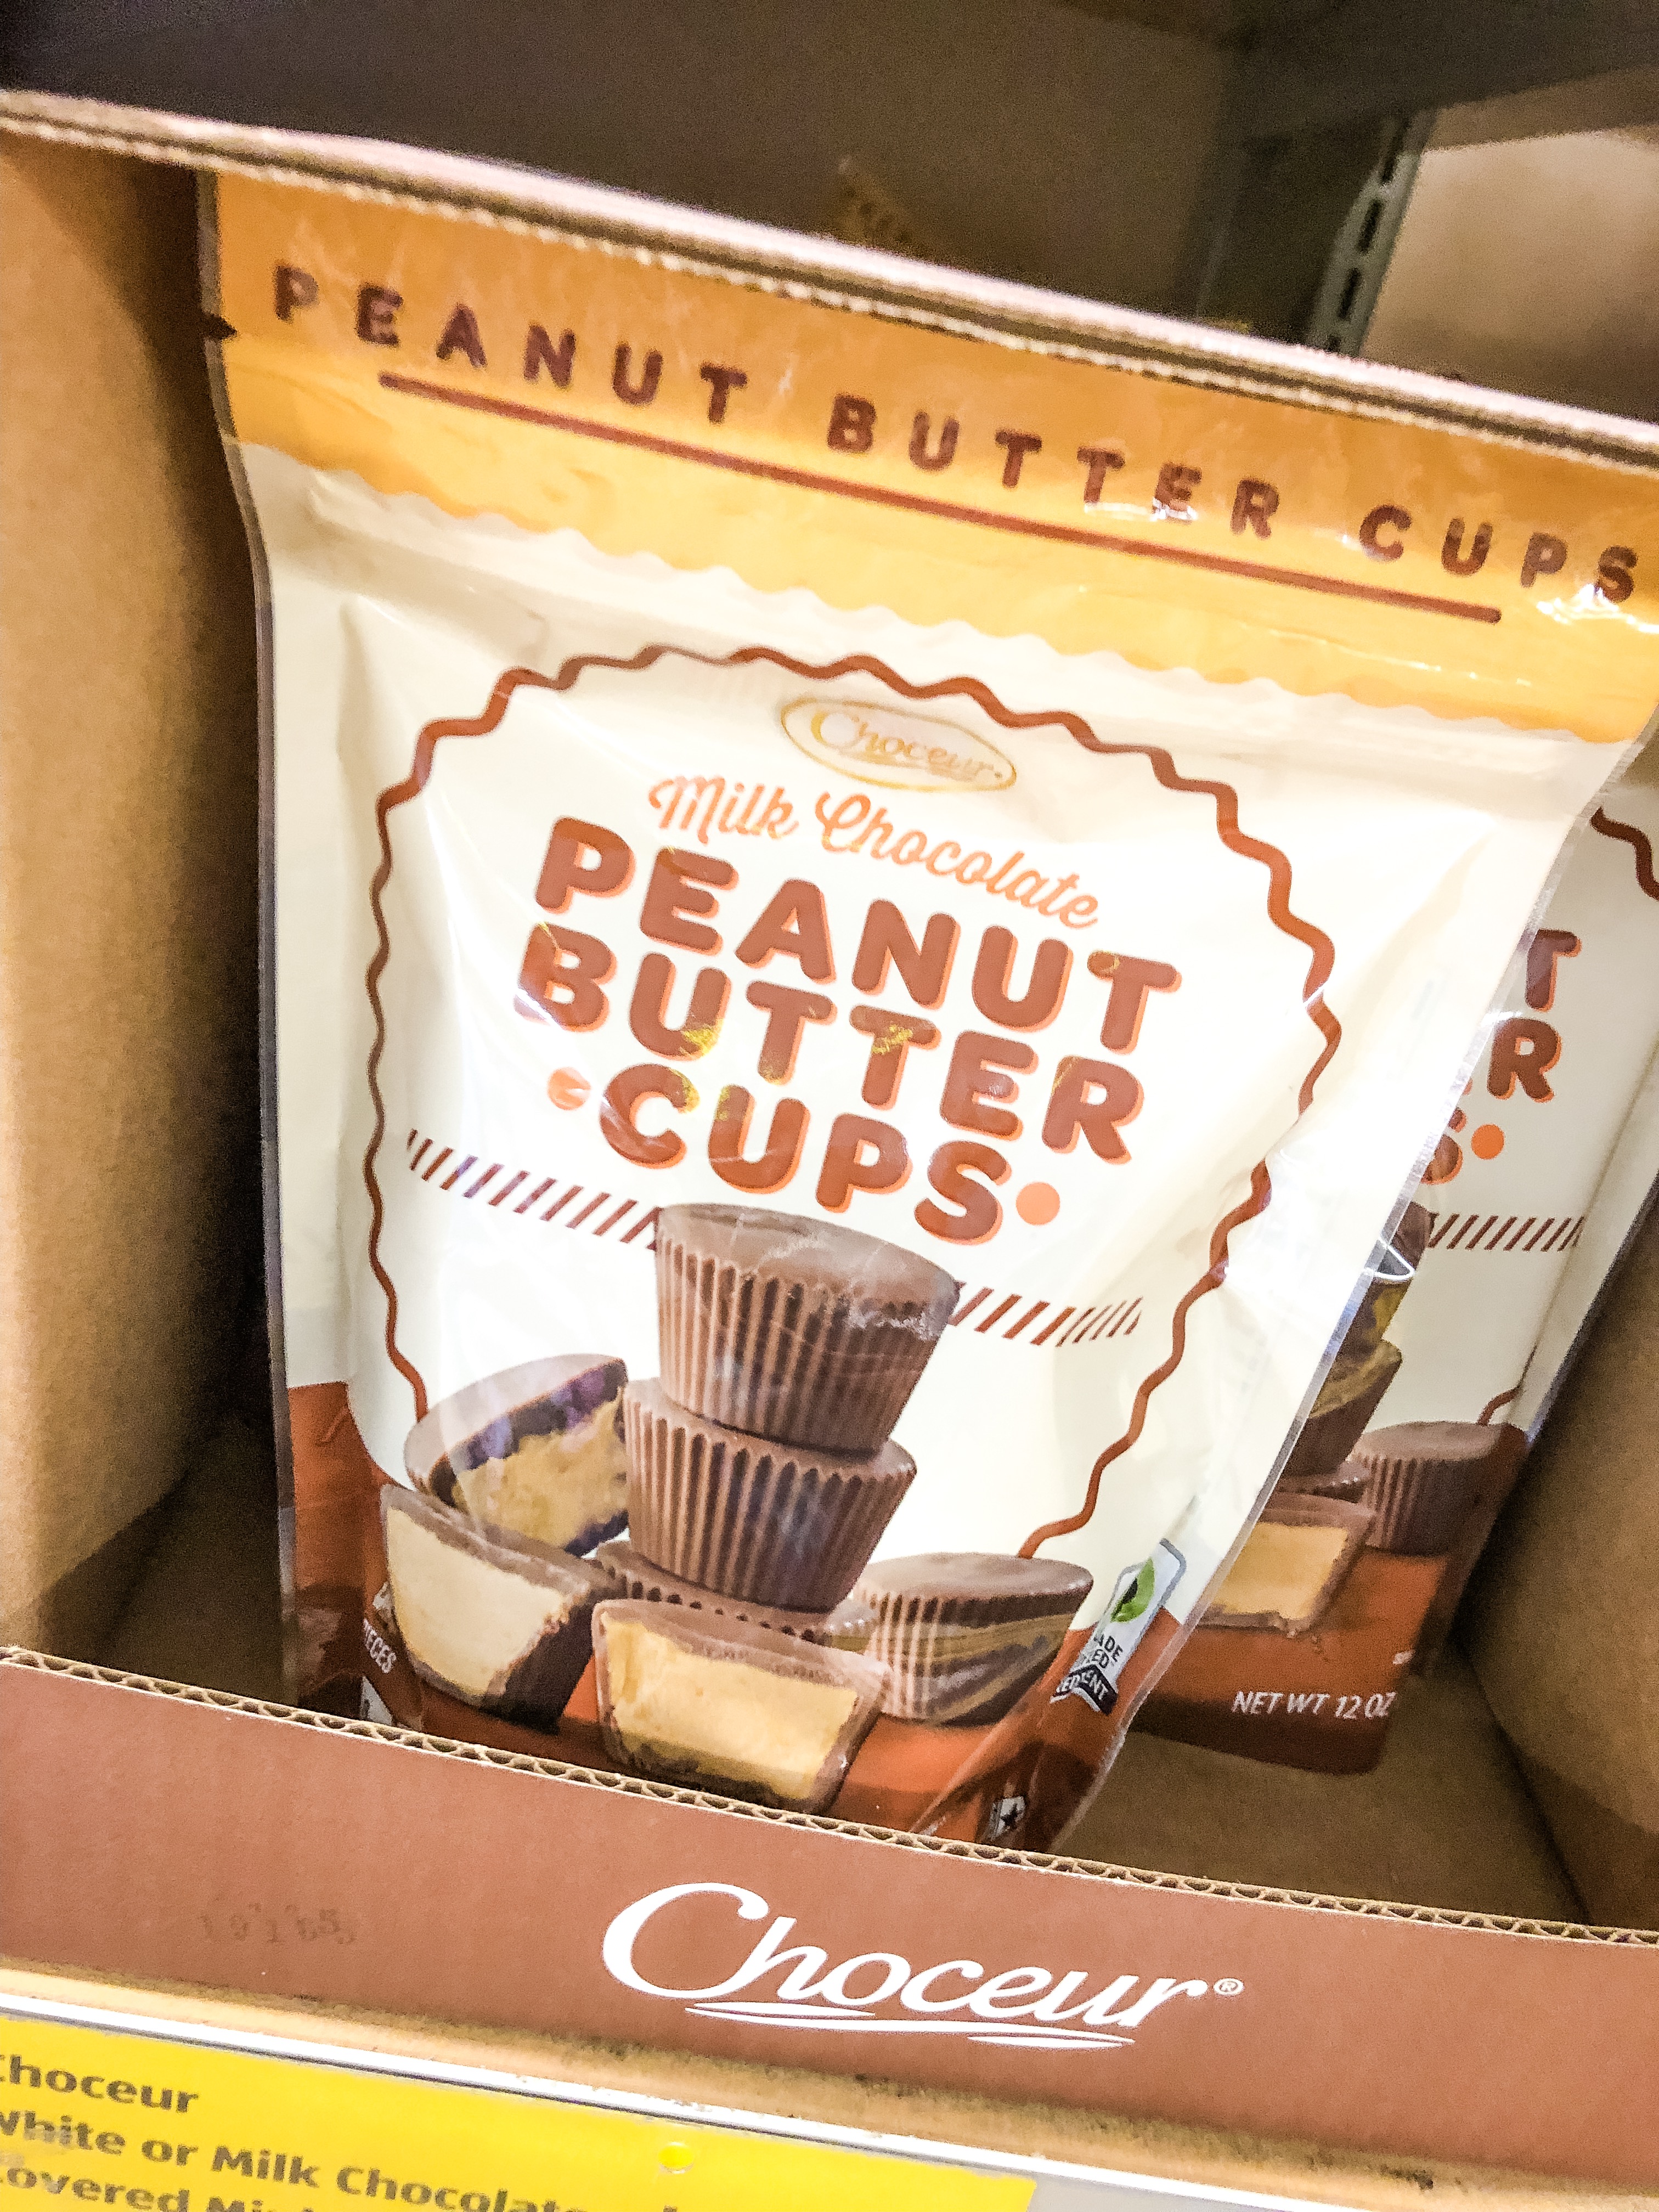 Choceur Peanut Butter Cups from Aldi